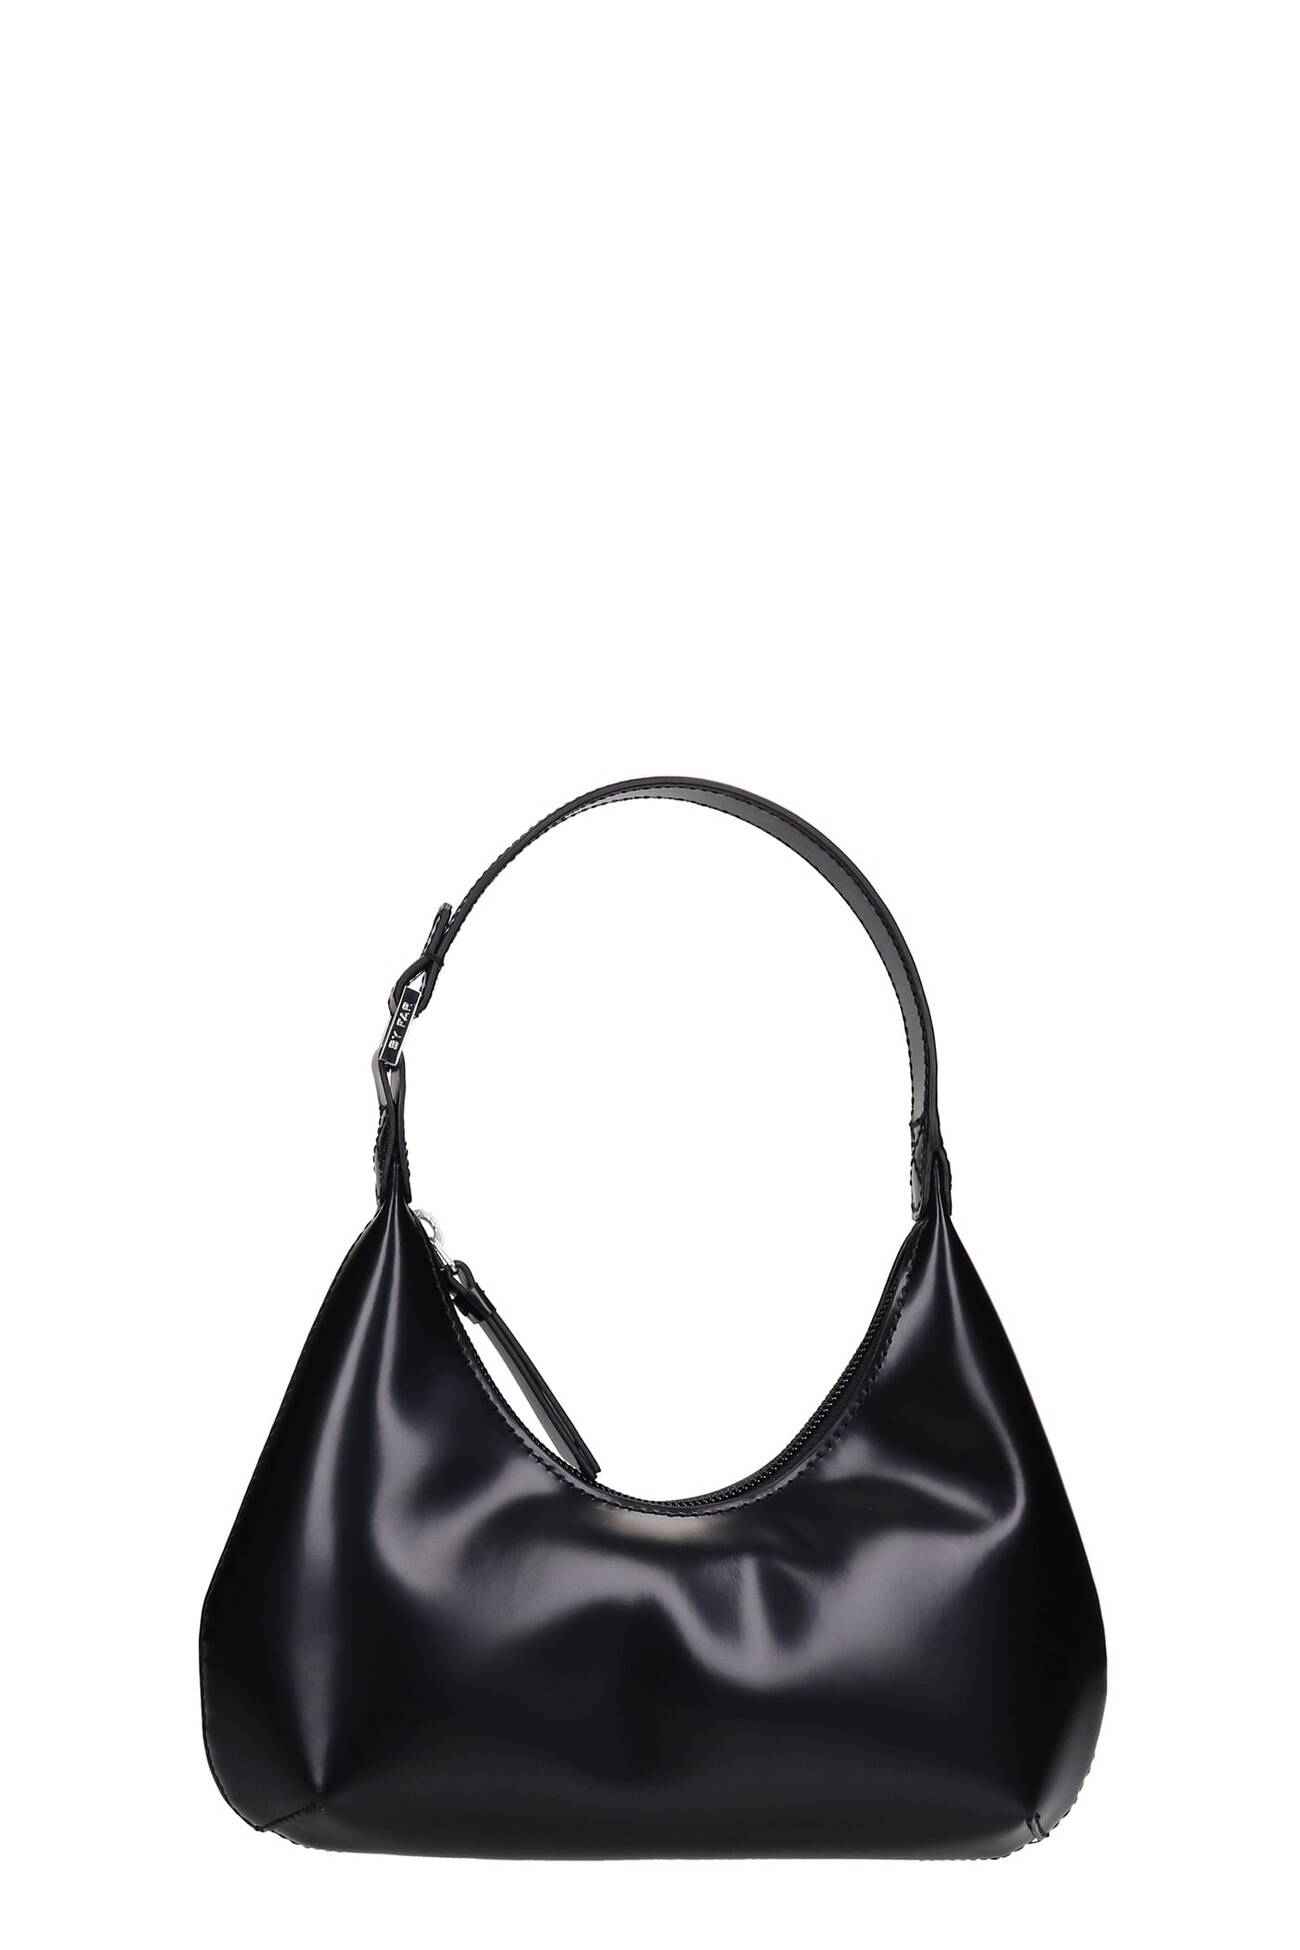 BY FAR Shoulder Bag In Black Patent Leather